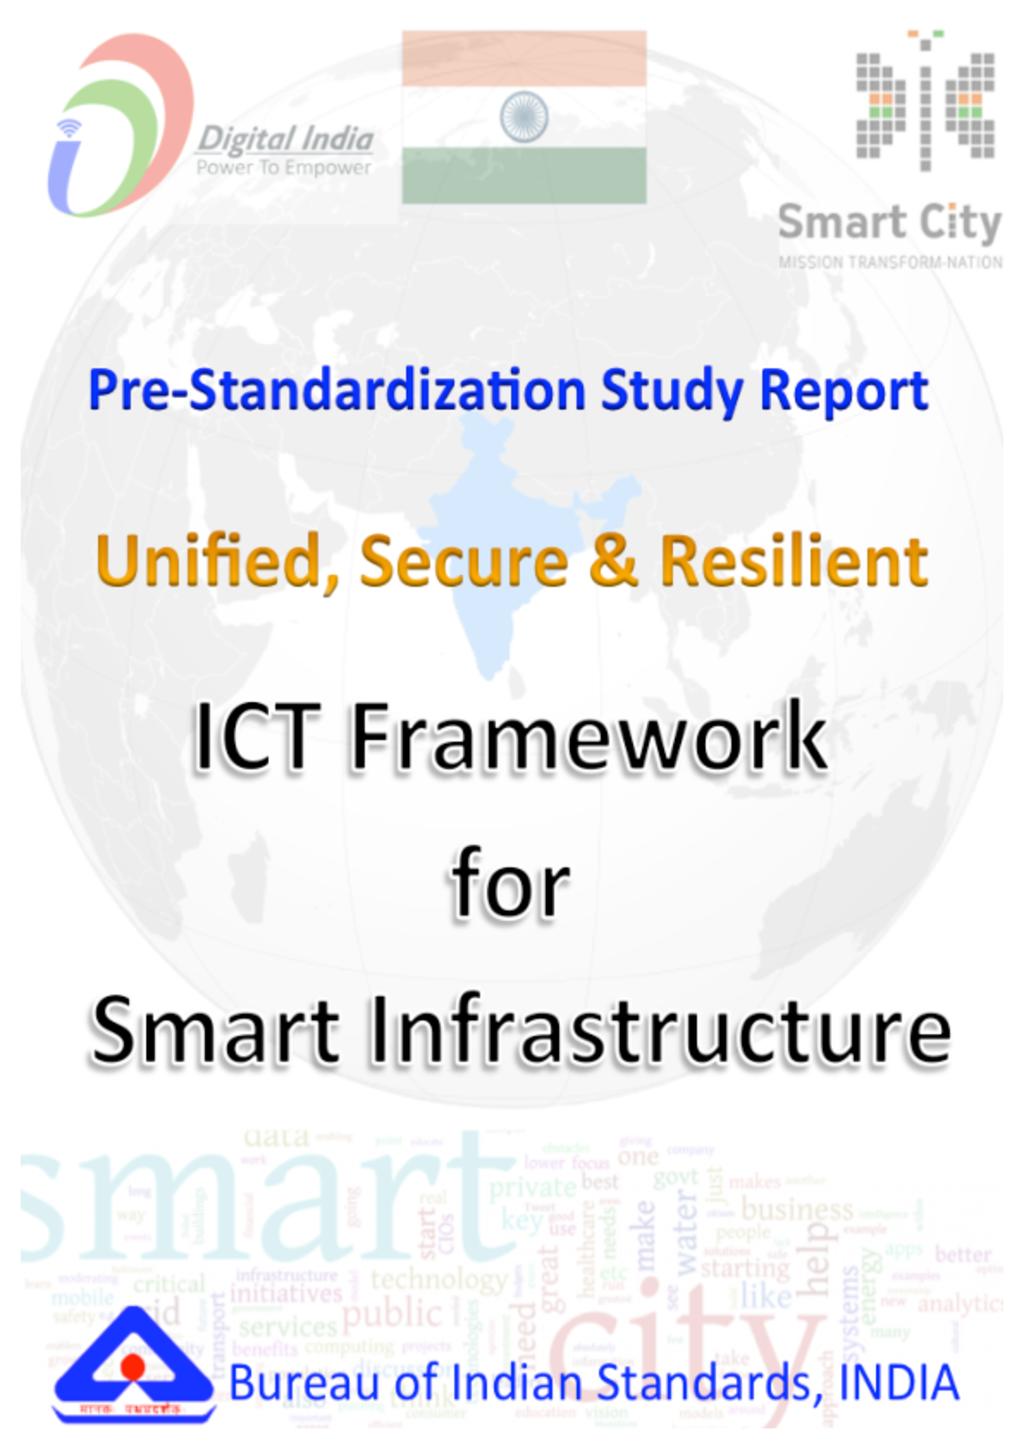 ICT framework for Smart Cities